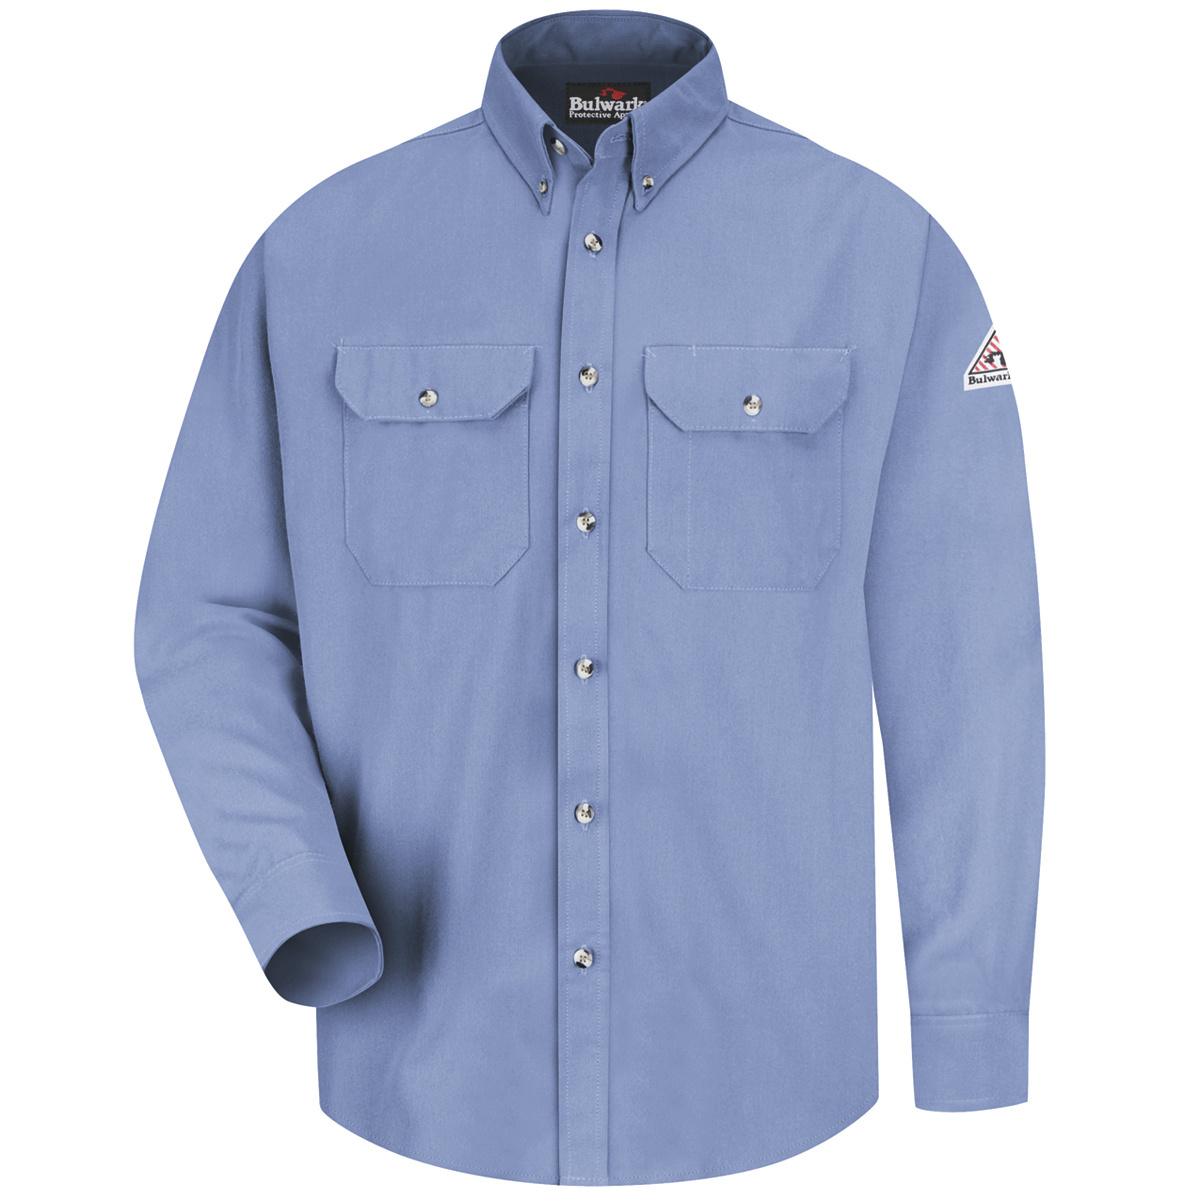 Bulwark® Medium Regular Light Blue Modacrylic/Lyocell/Aramid Flame Resistant Dress Uniform Shirt With Button Front Closure